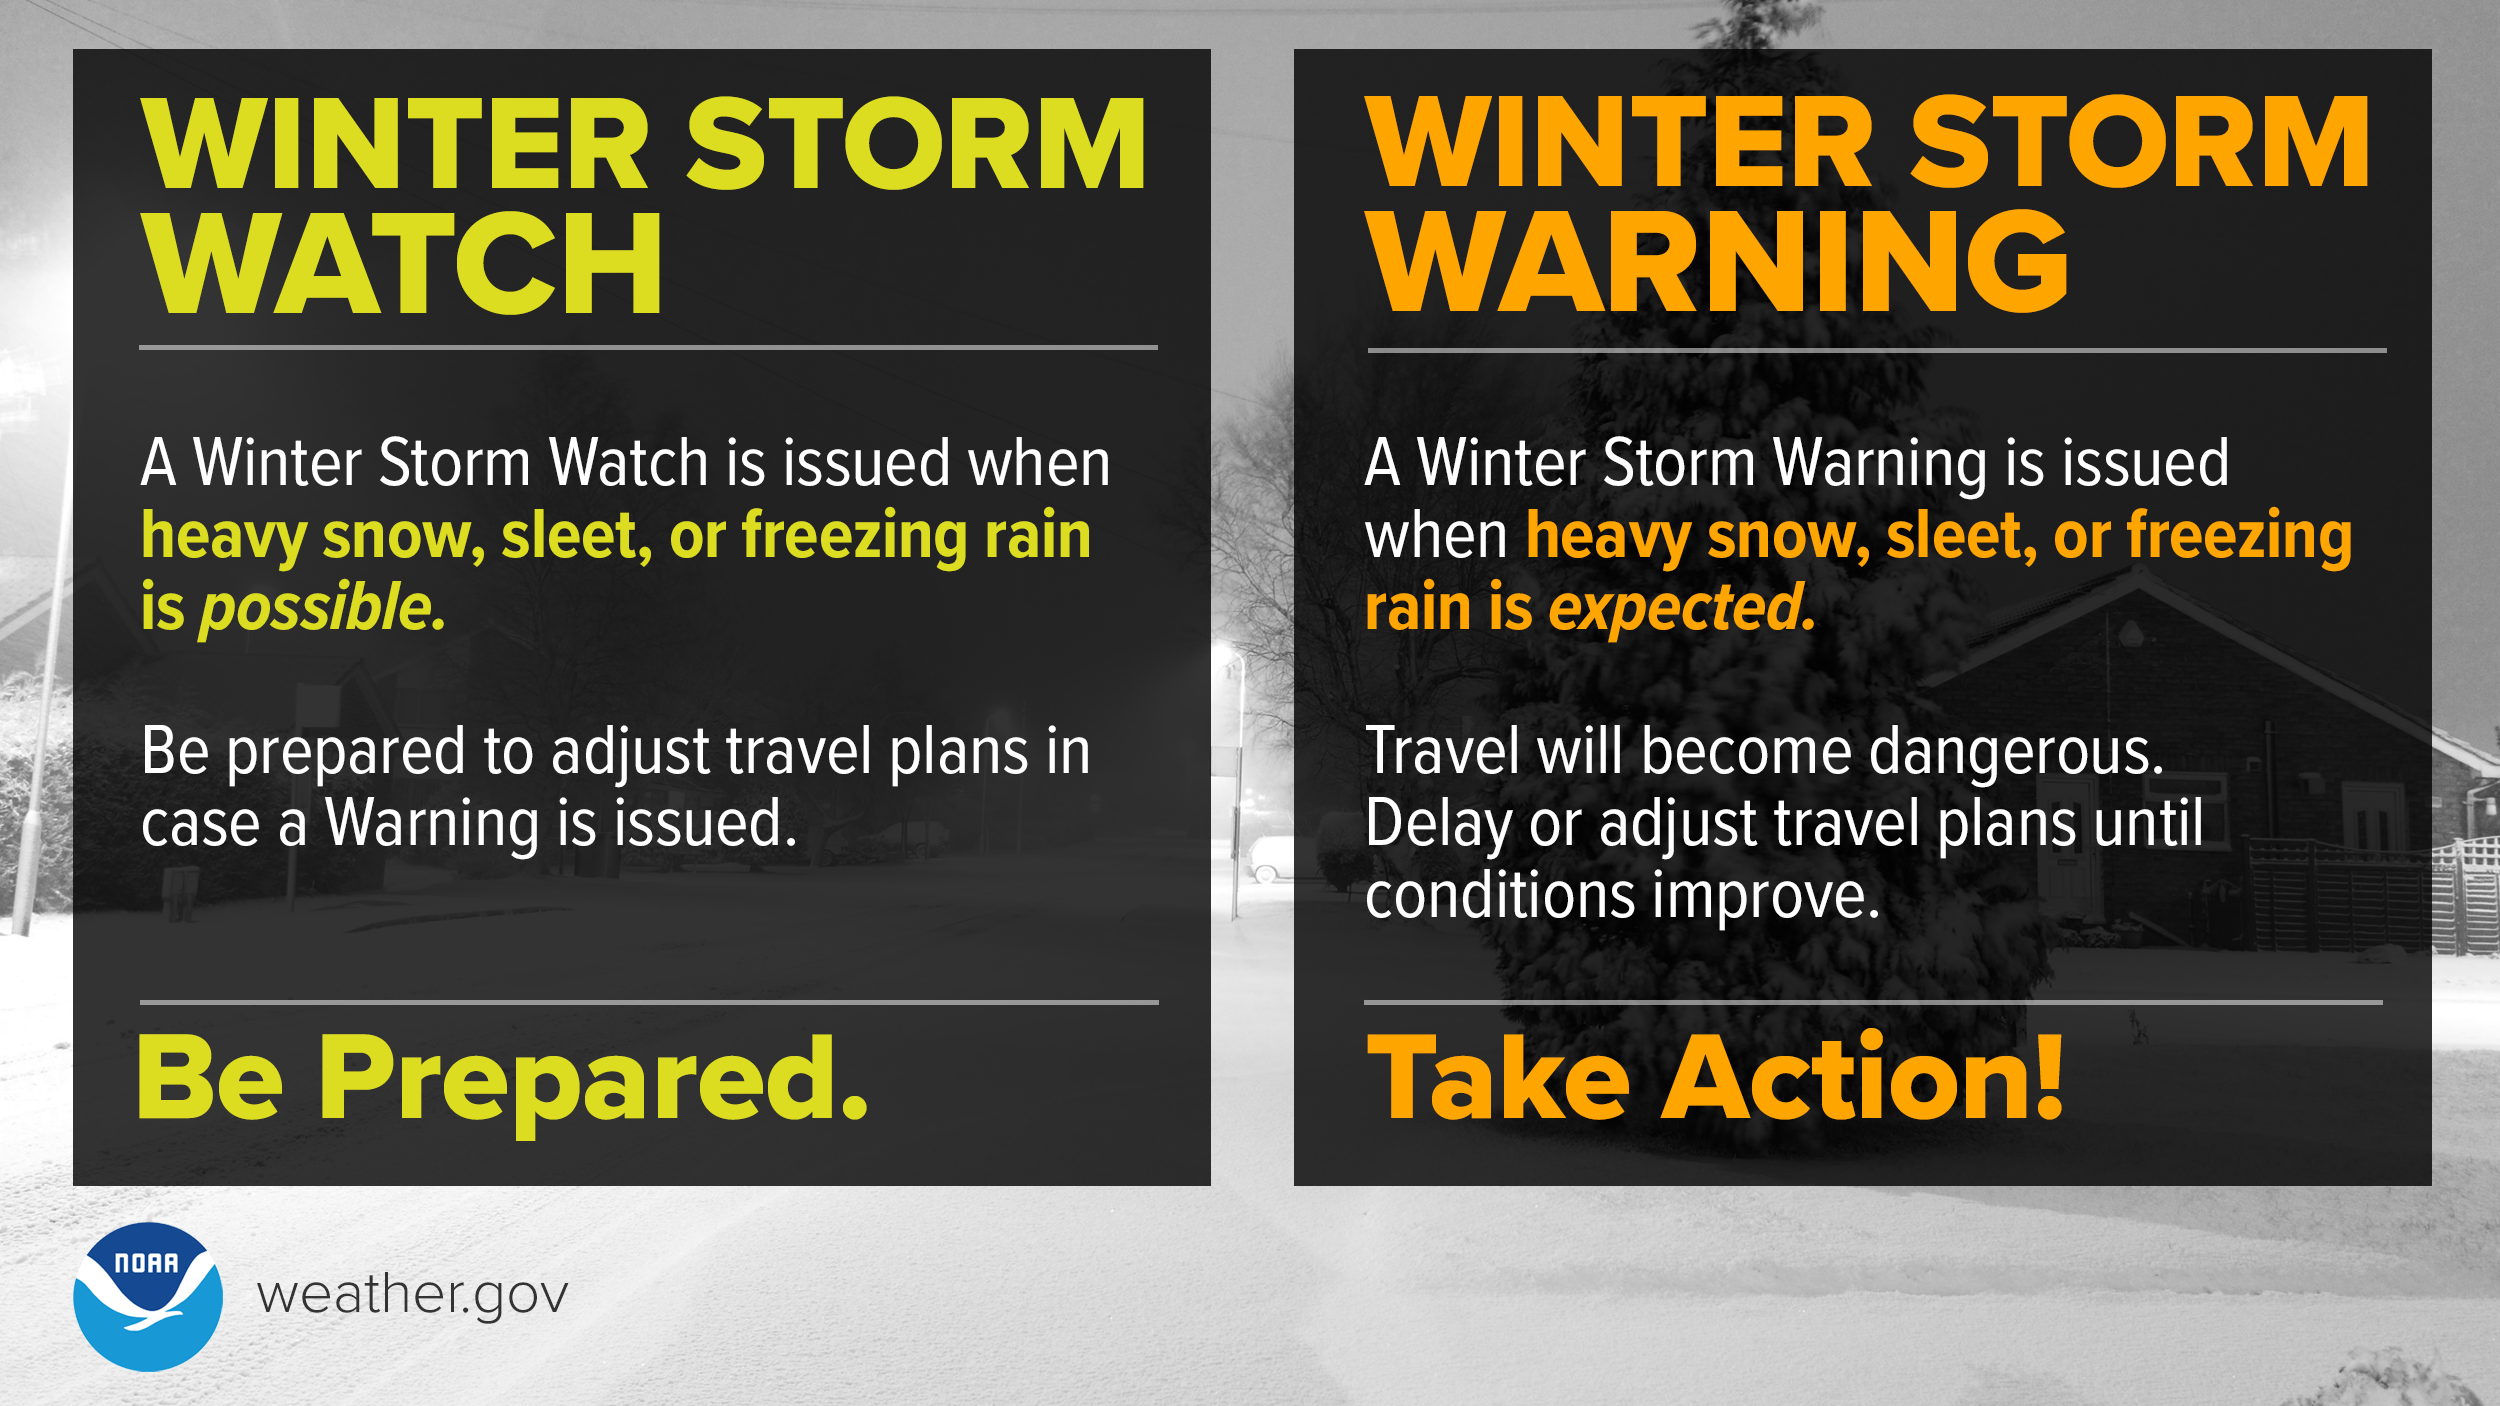 Watch vs Warning - Winter Storm